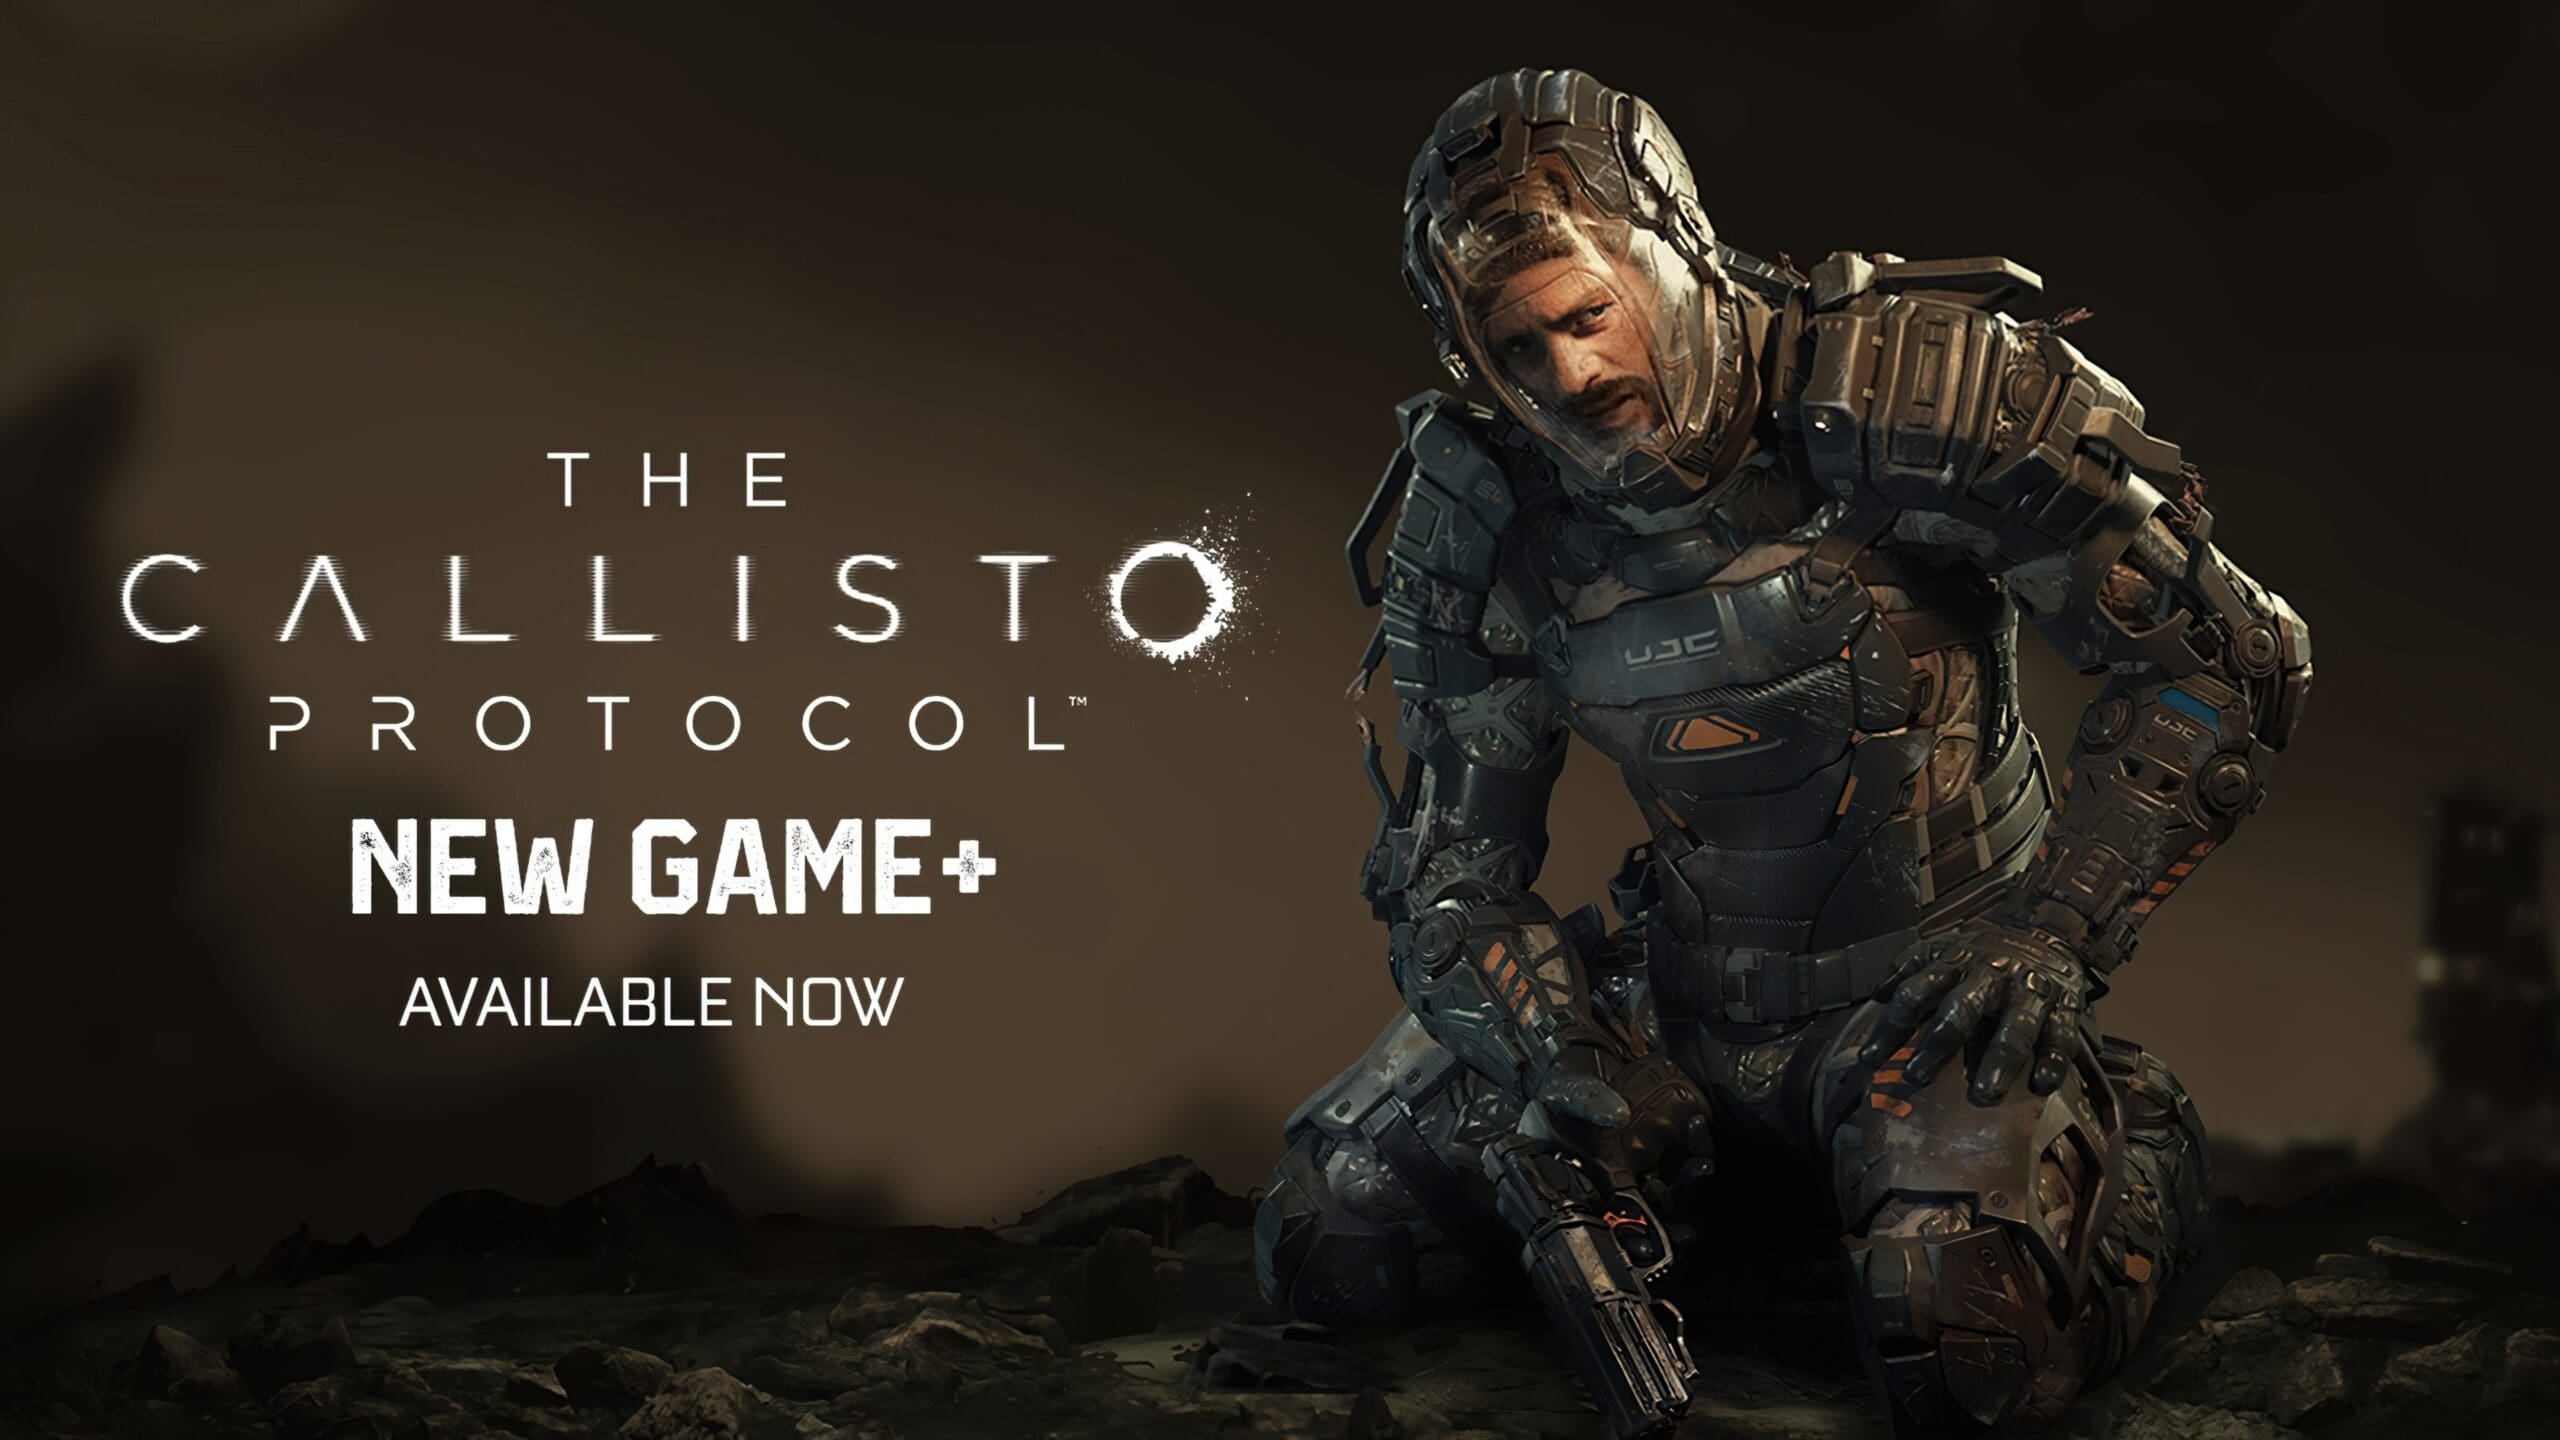 Video Game Review: The Callisto Protocol